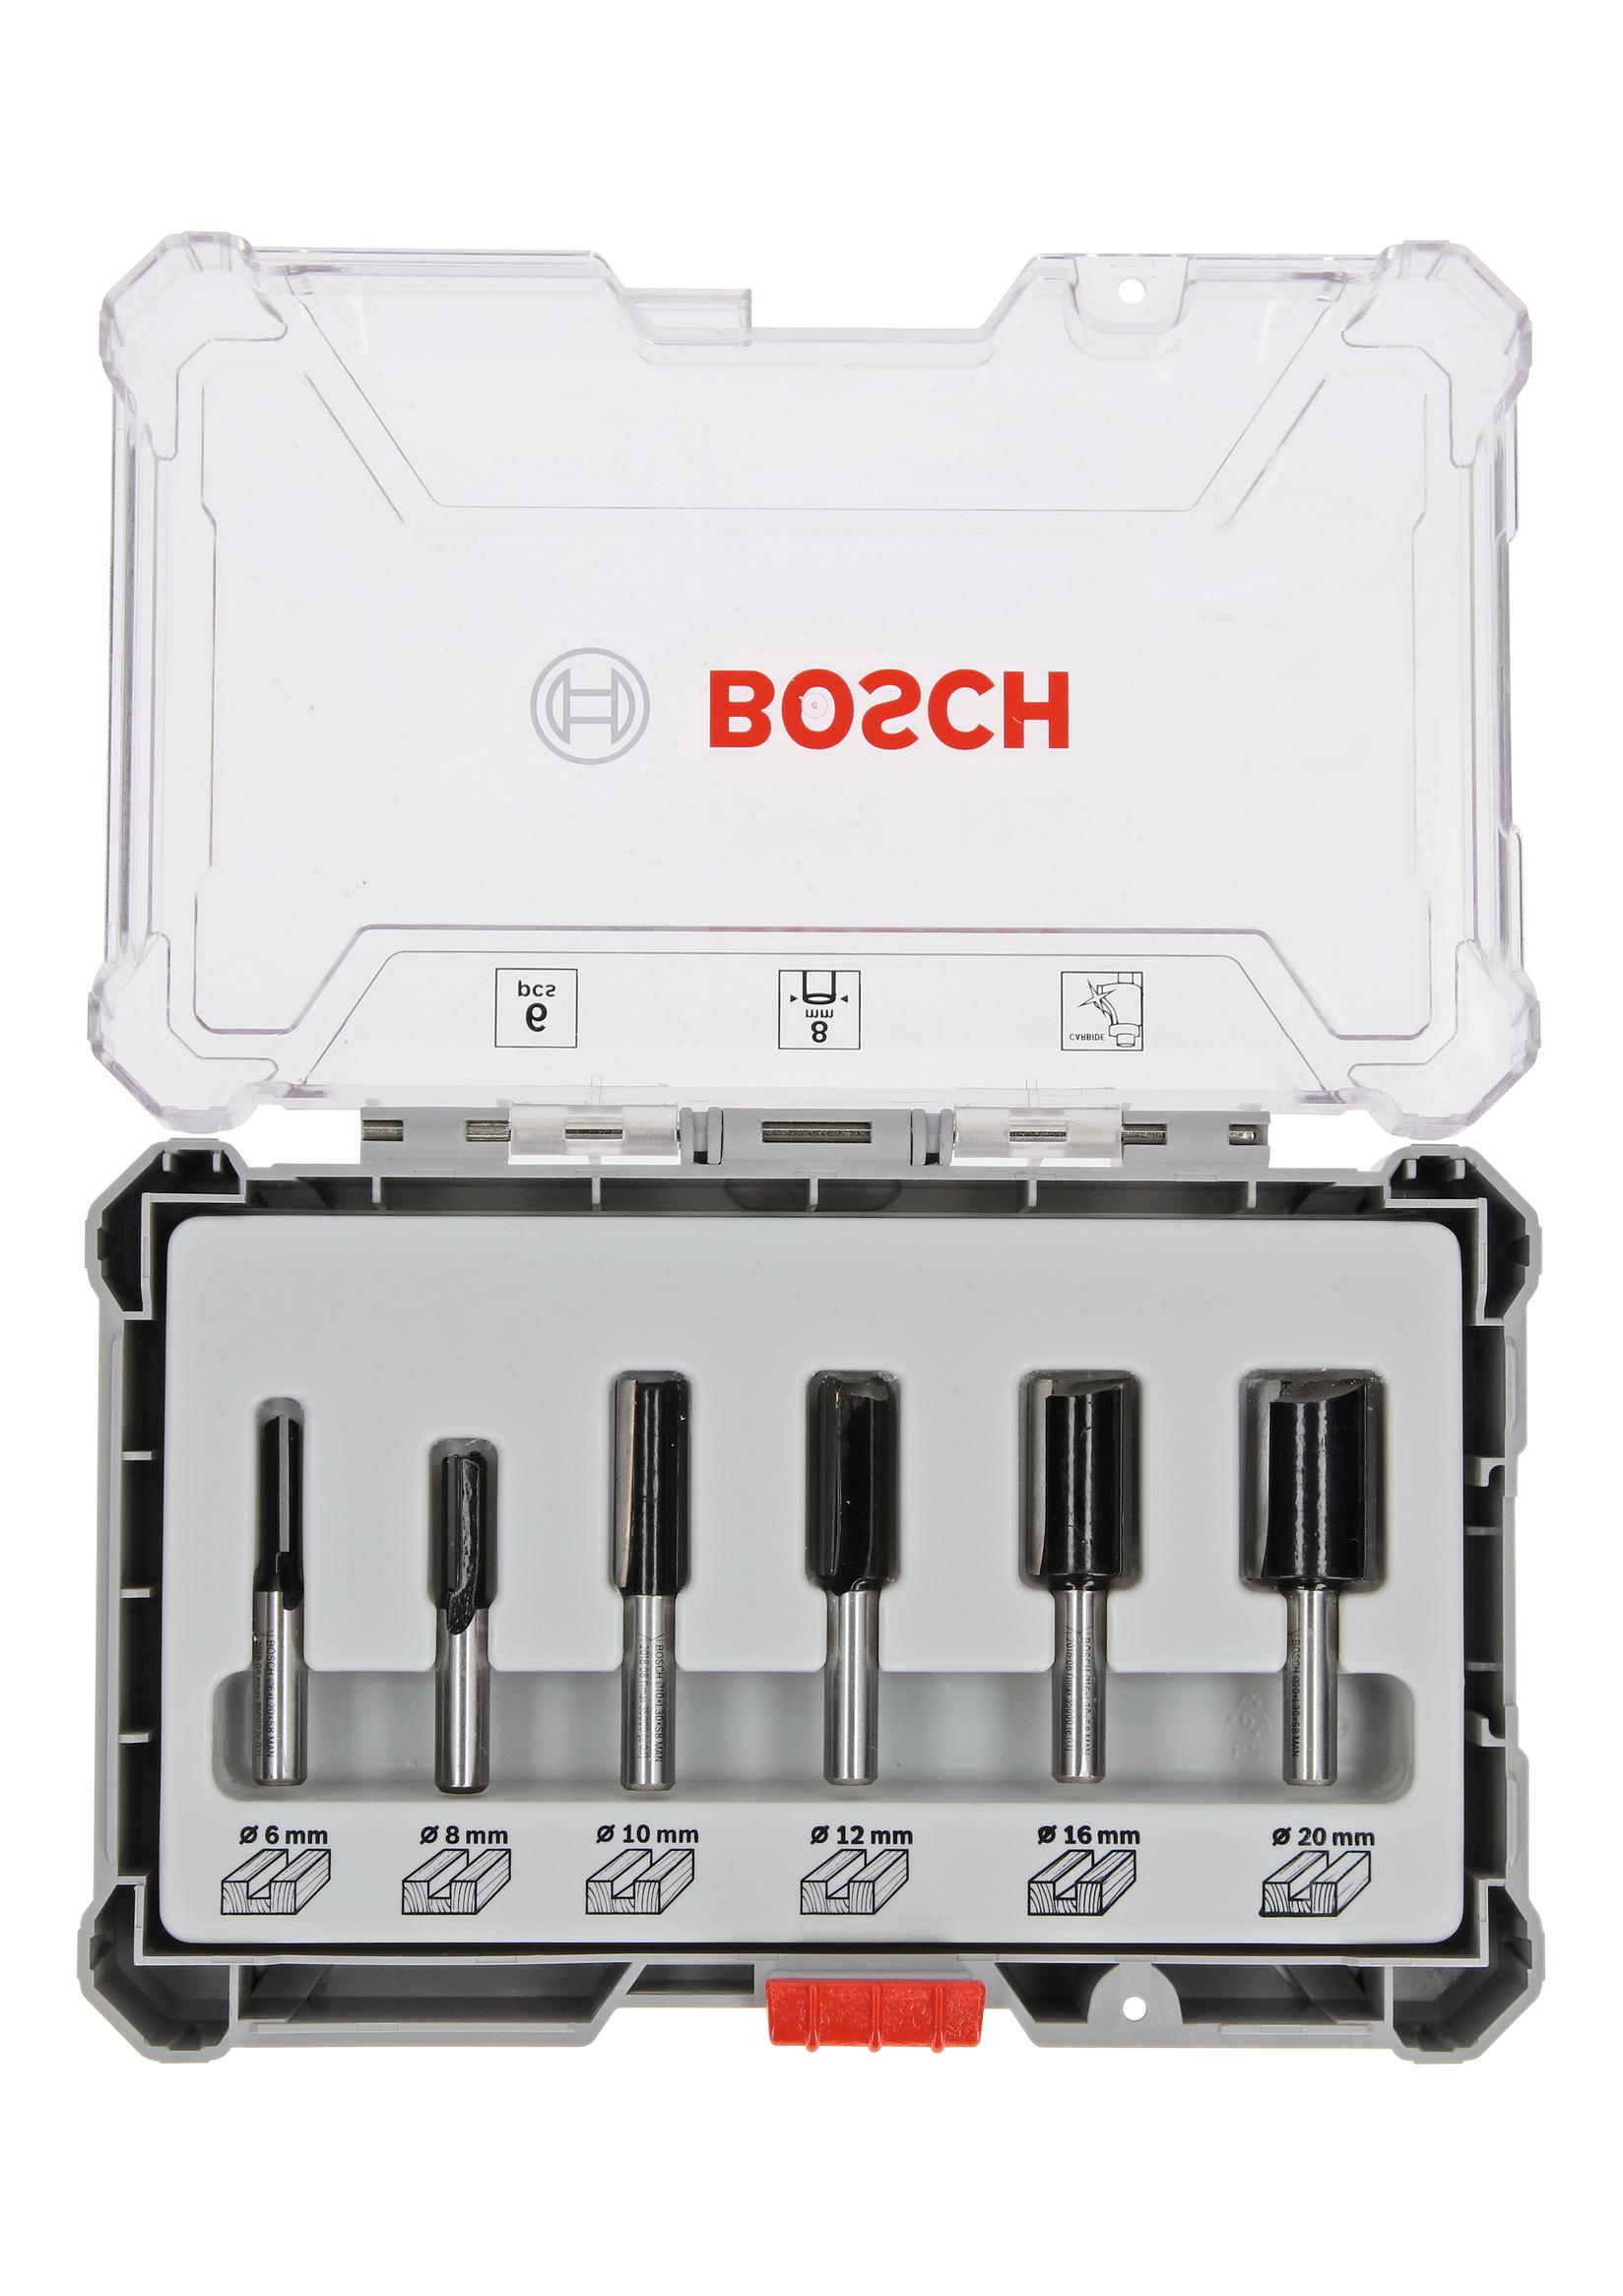 Bosch Komplet ravnih glodala, 6 komada, držač od 8 mm 2607017466, 6-piece Straight Router Bit Set.